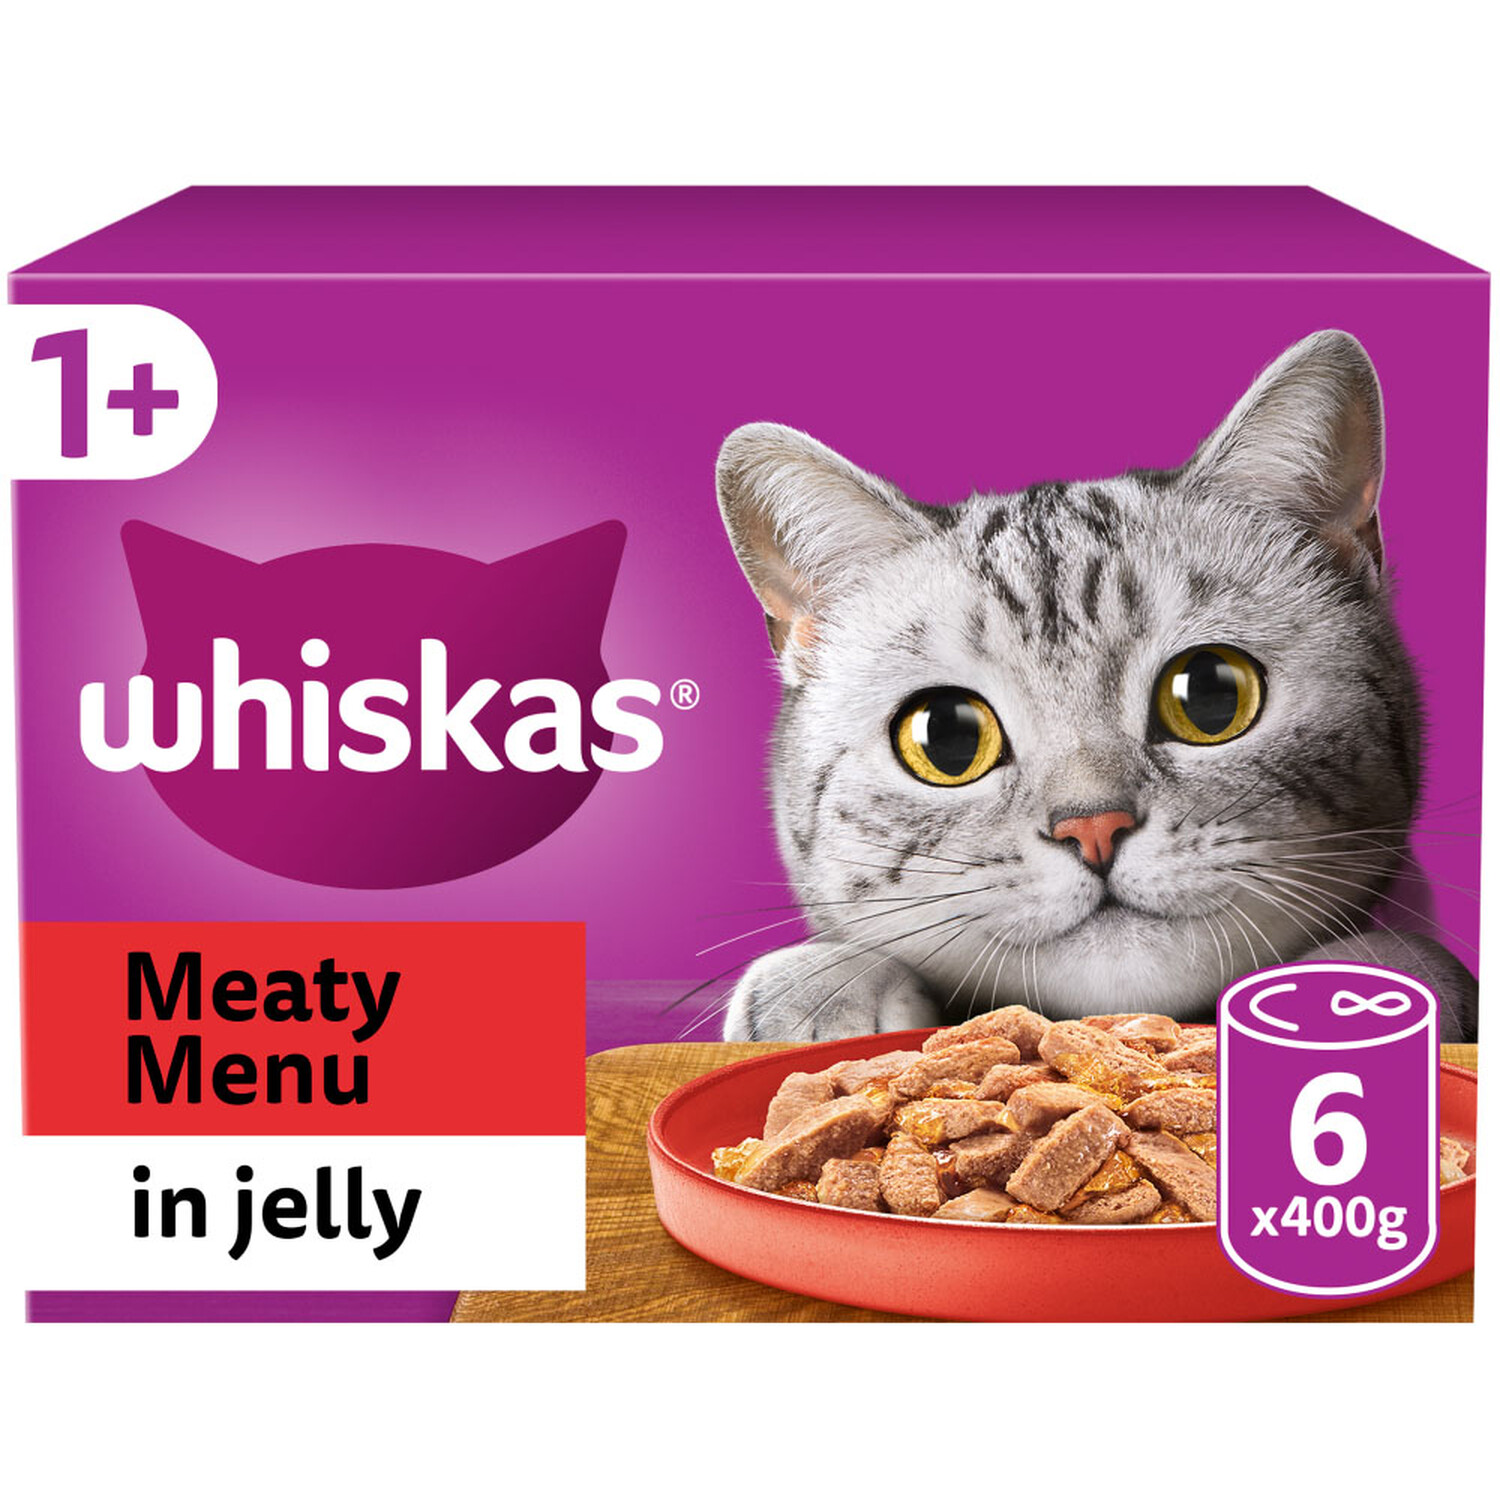 Whiskas 1 Plus Years Meaty Menu in Jelly Cat Food Tins 6 Pack Image 1